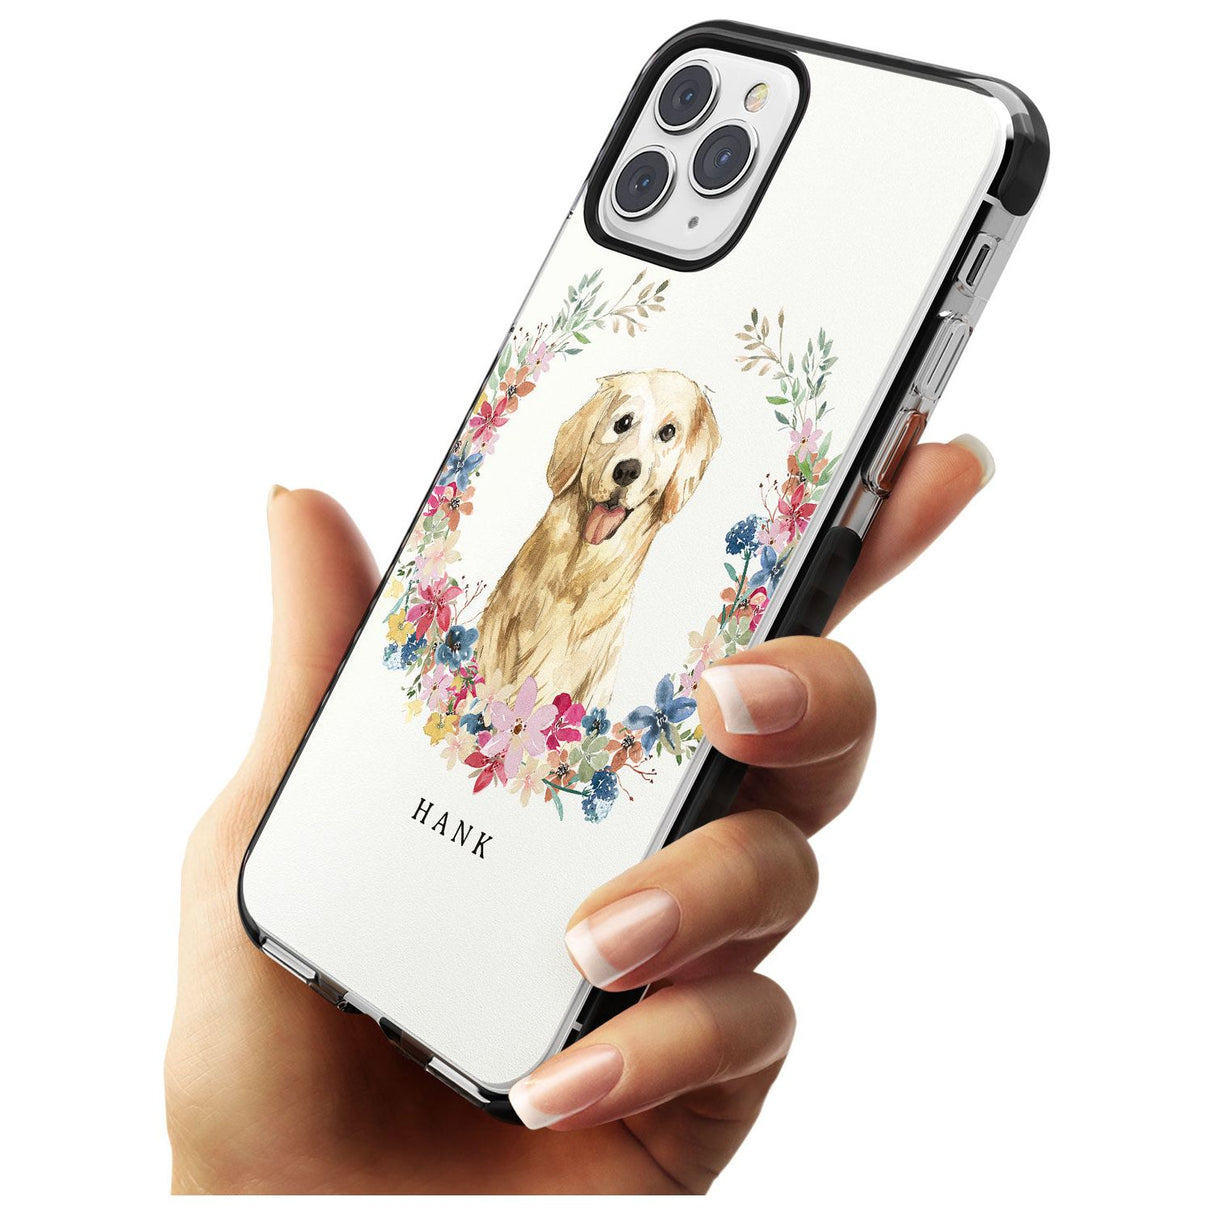 Golden Retriever - Watercolour Dog Portrait Black Impact Phone Case for iPhone 11 Pro Max